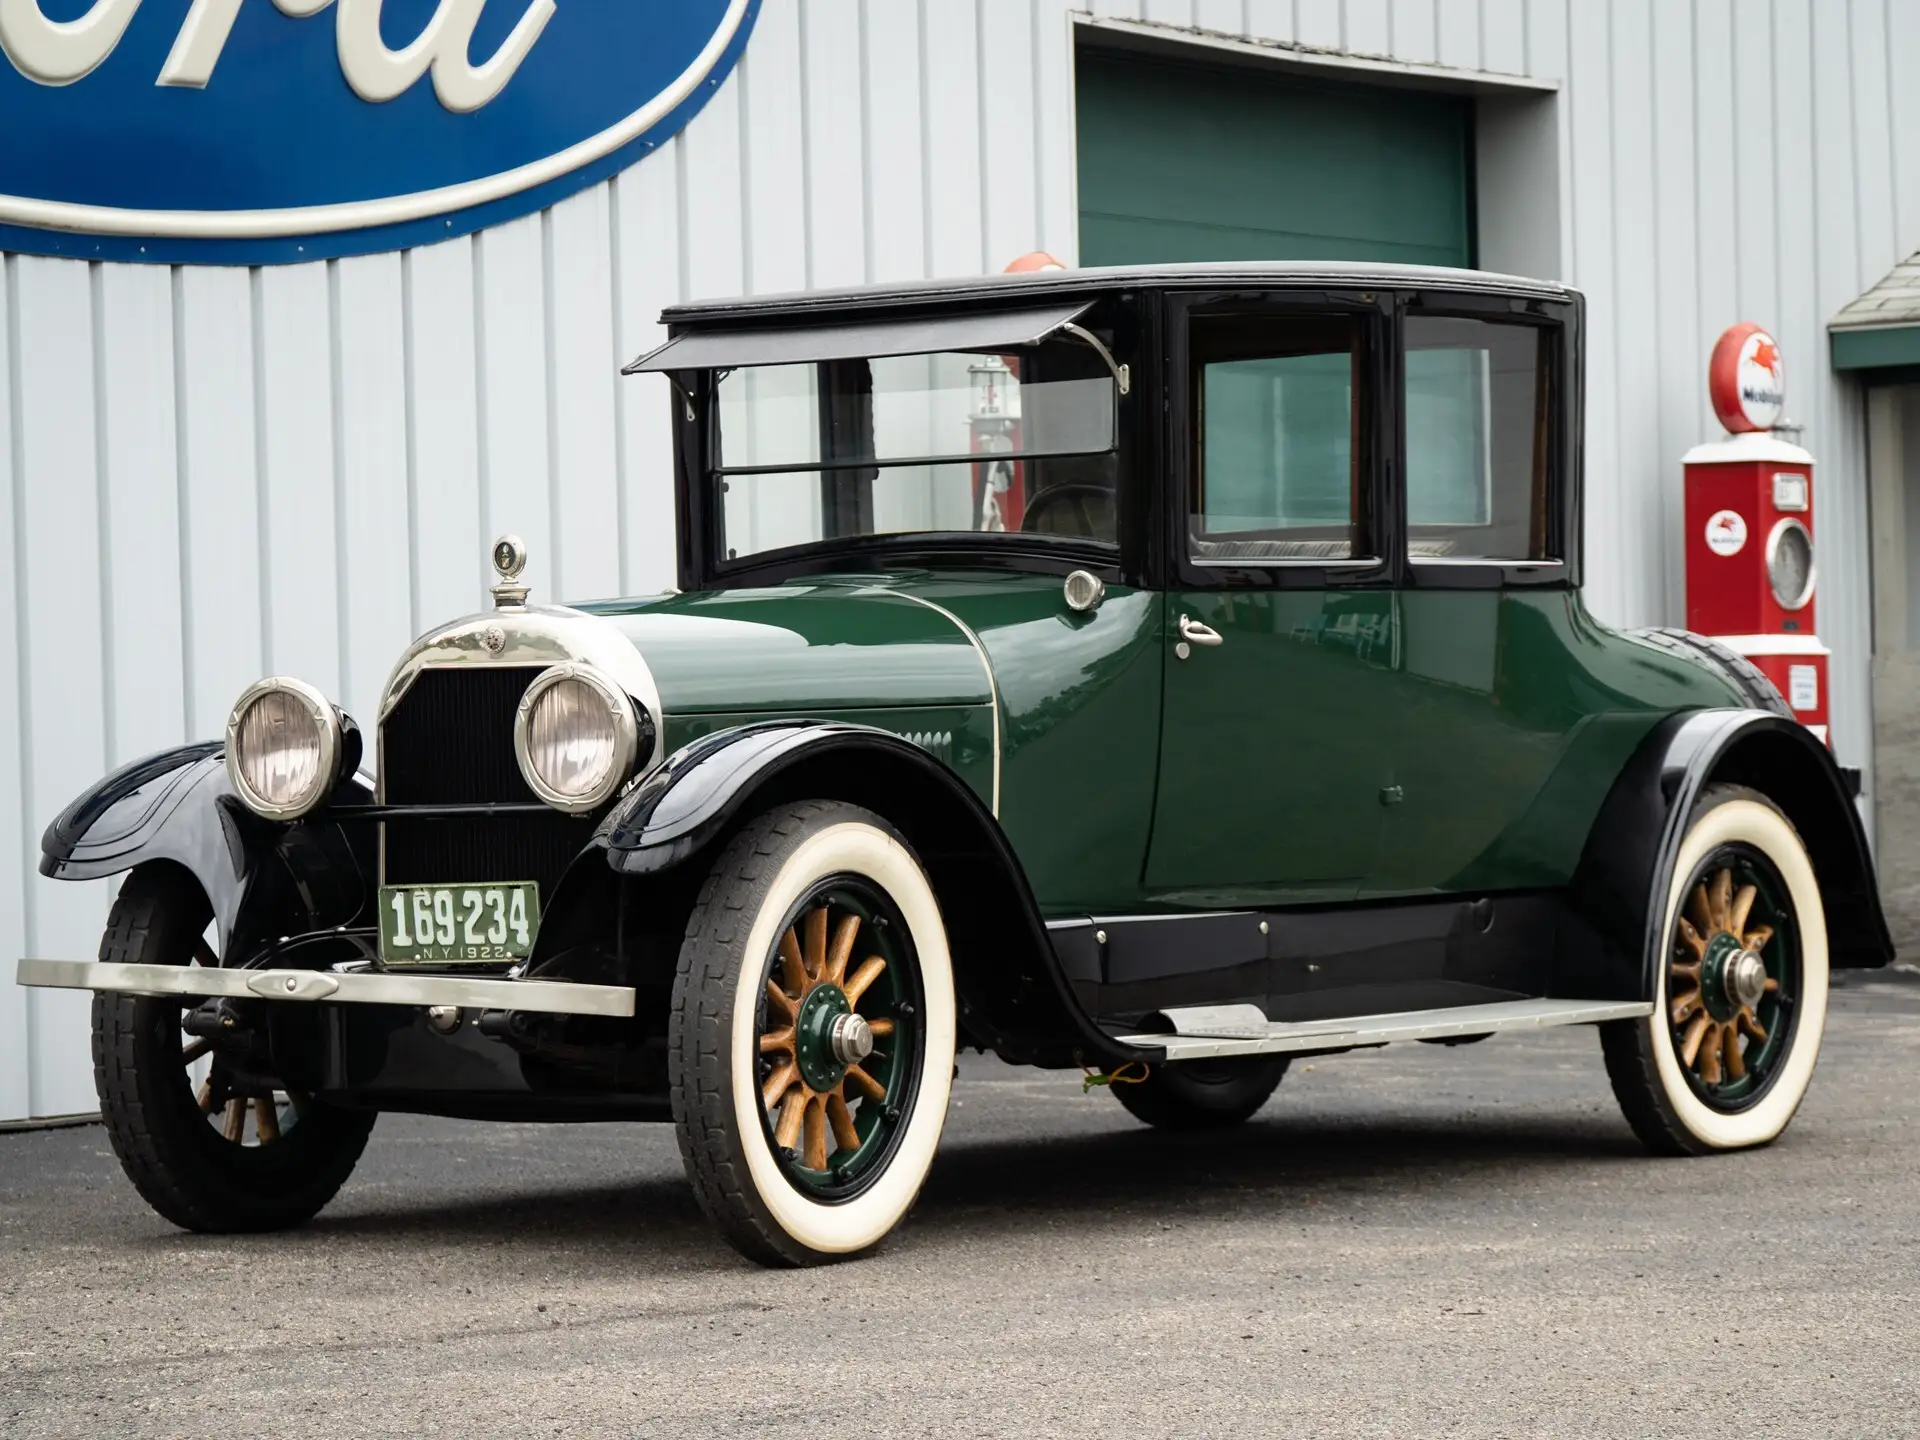 1922 Cadillac Type 61 Four-Passenger Victoria